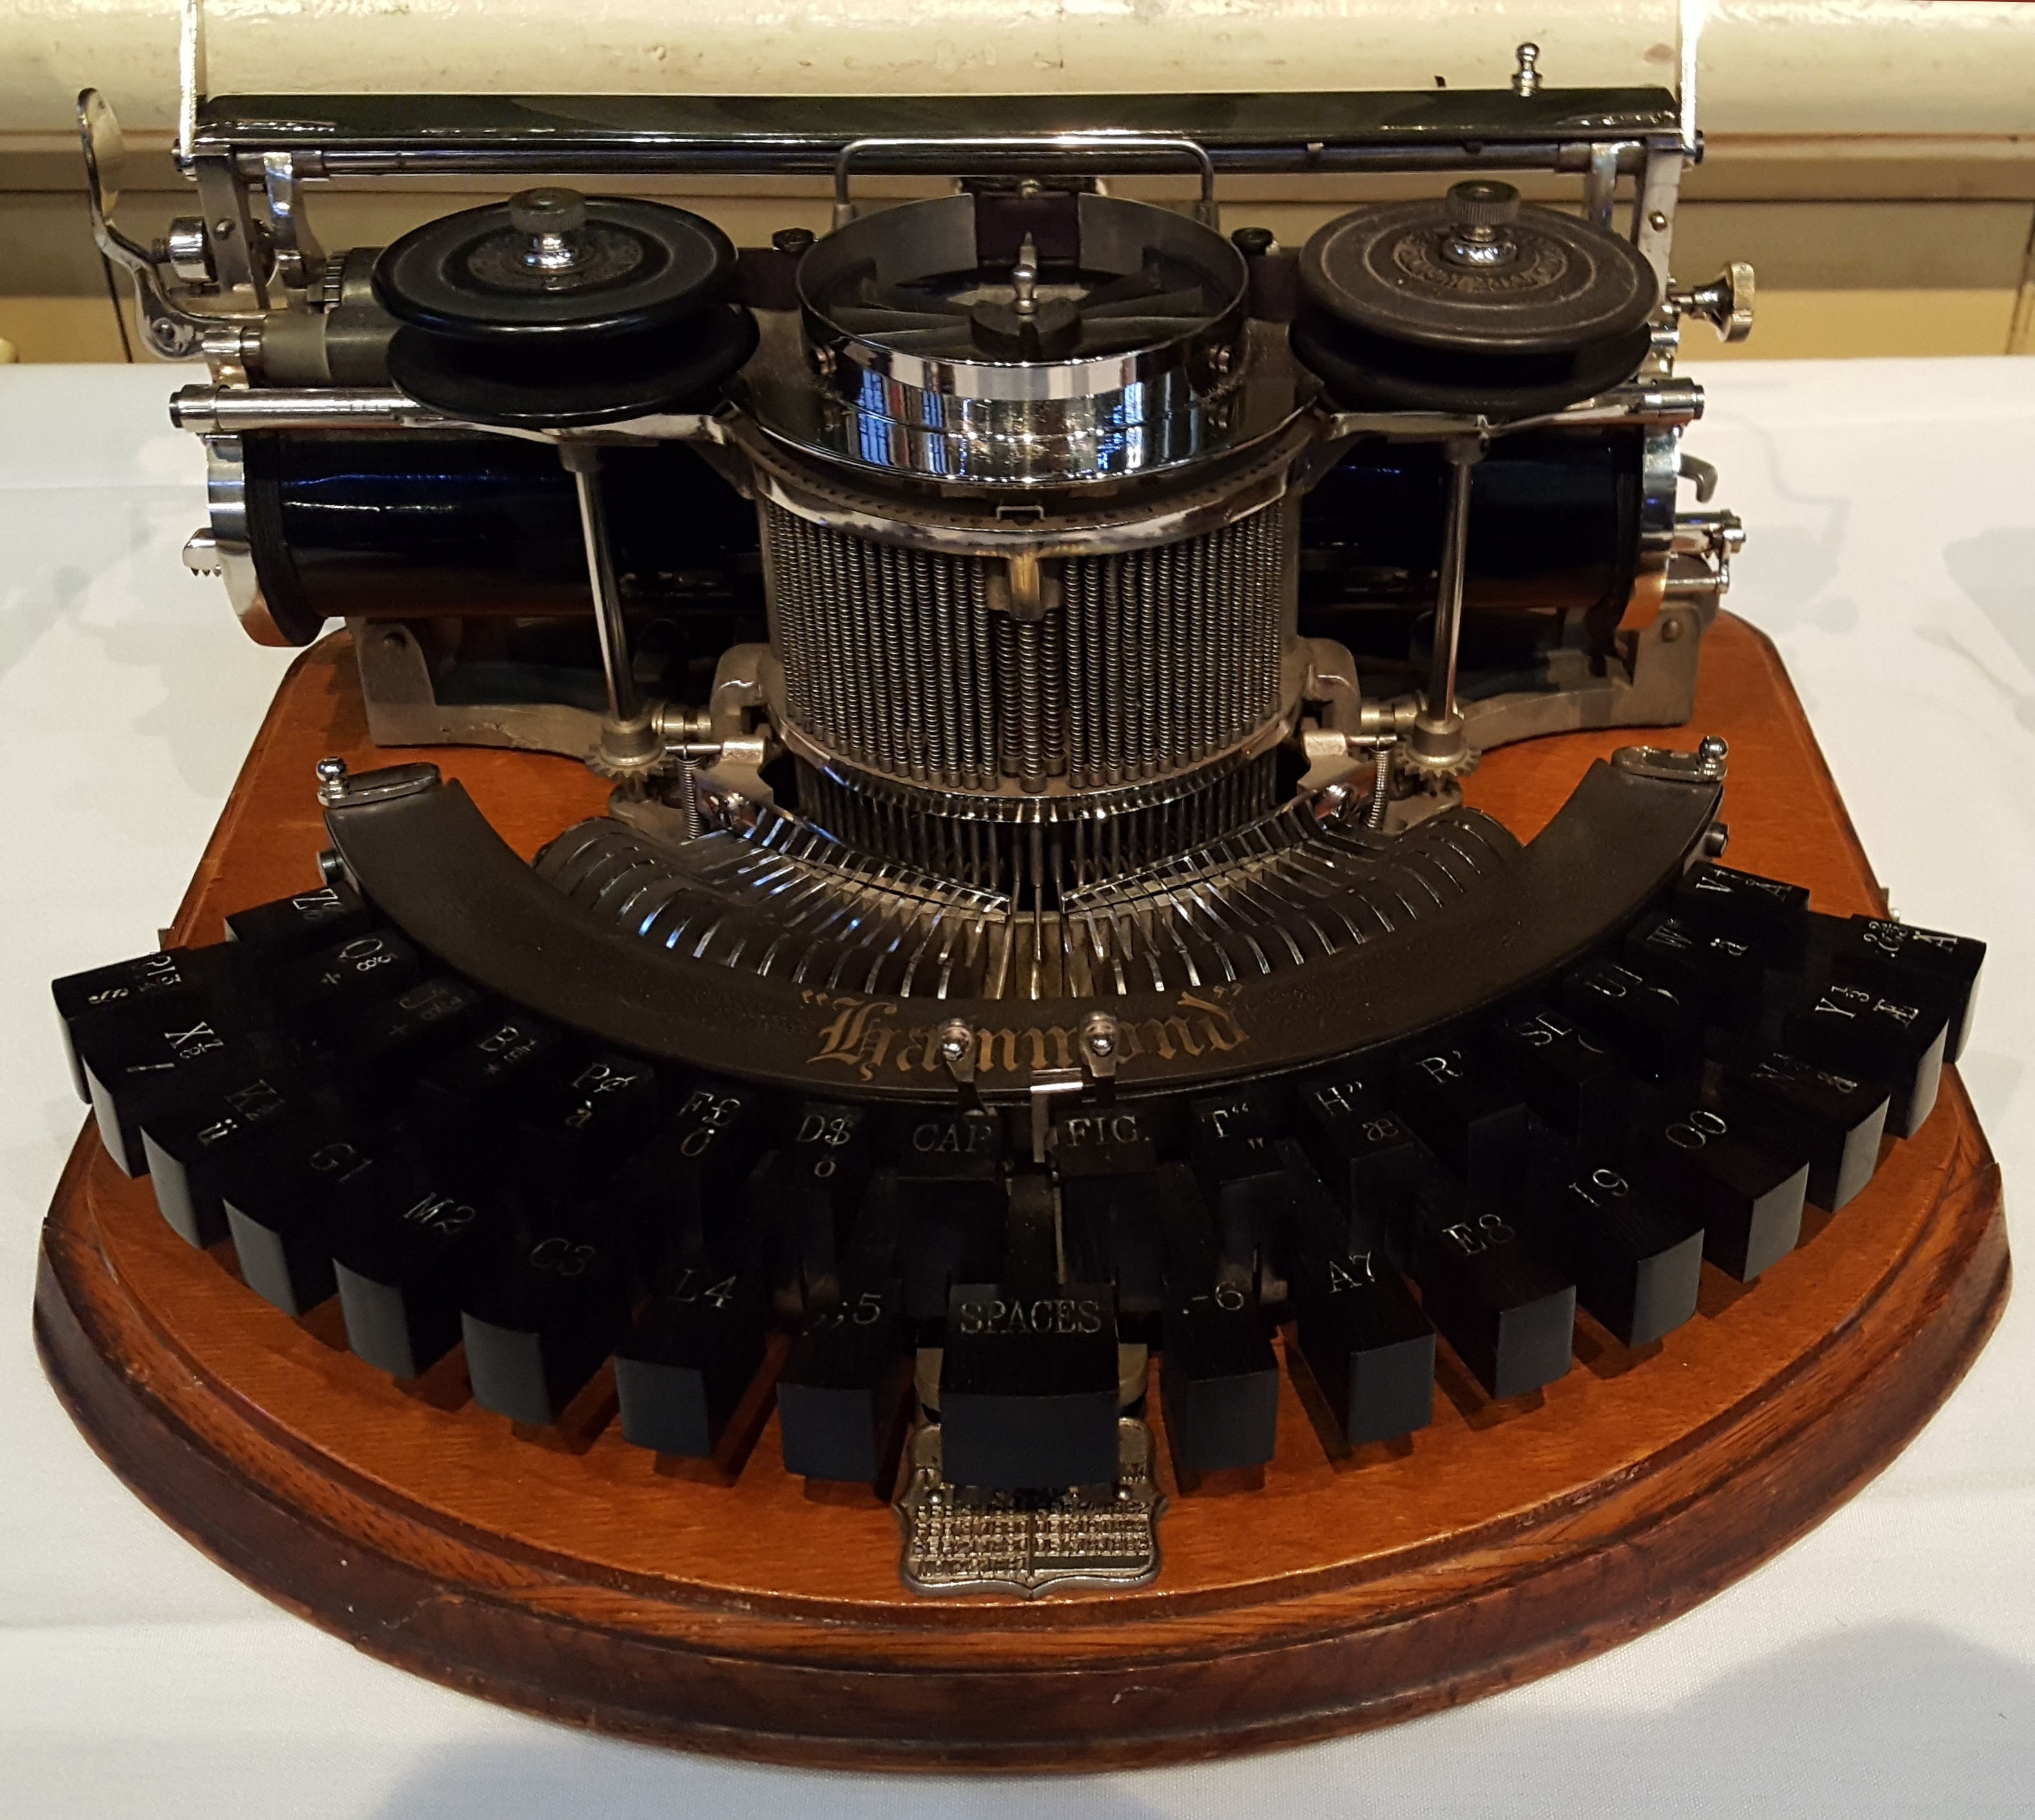 The Hammond 1b typewriter